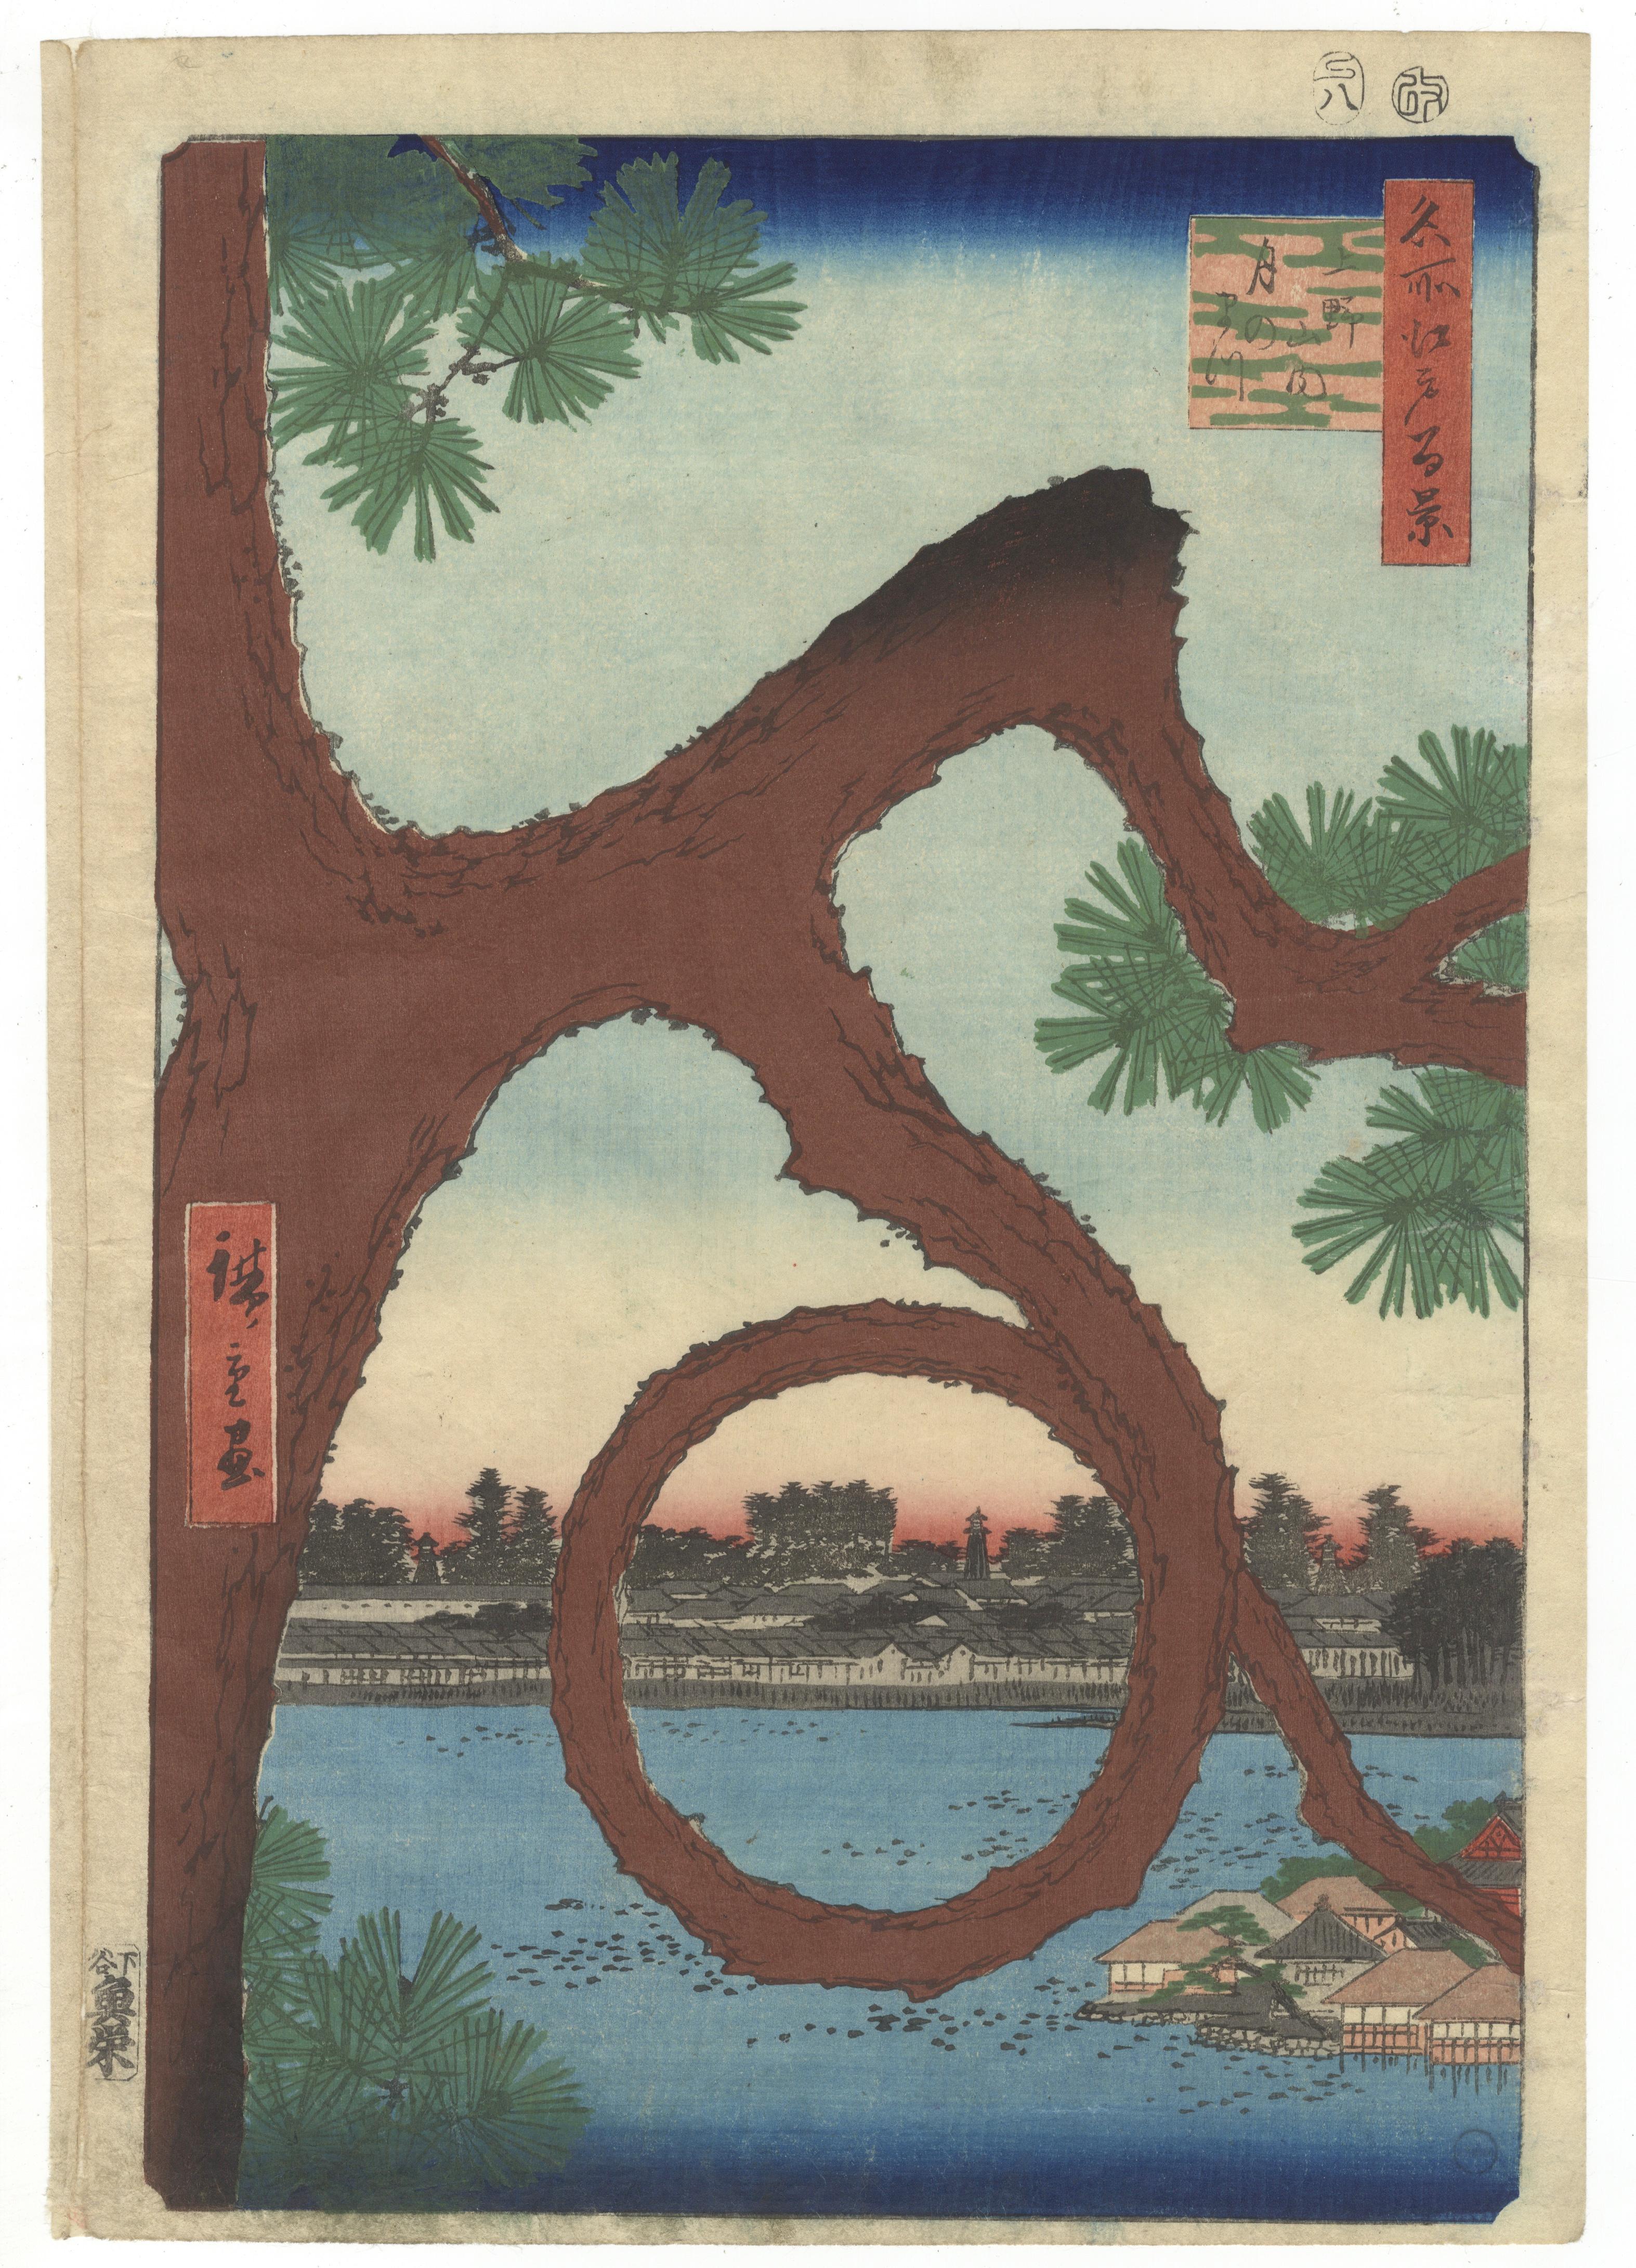 Utagawa Hiroshige (Ando Hiroshige) Portrait Print - Hiroshige I, Moon Pine, Ueno, Landscape, Japanese Woodblock Print, Edo Period